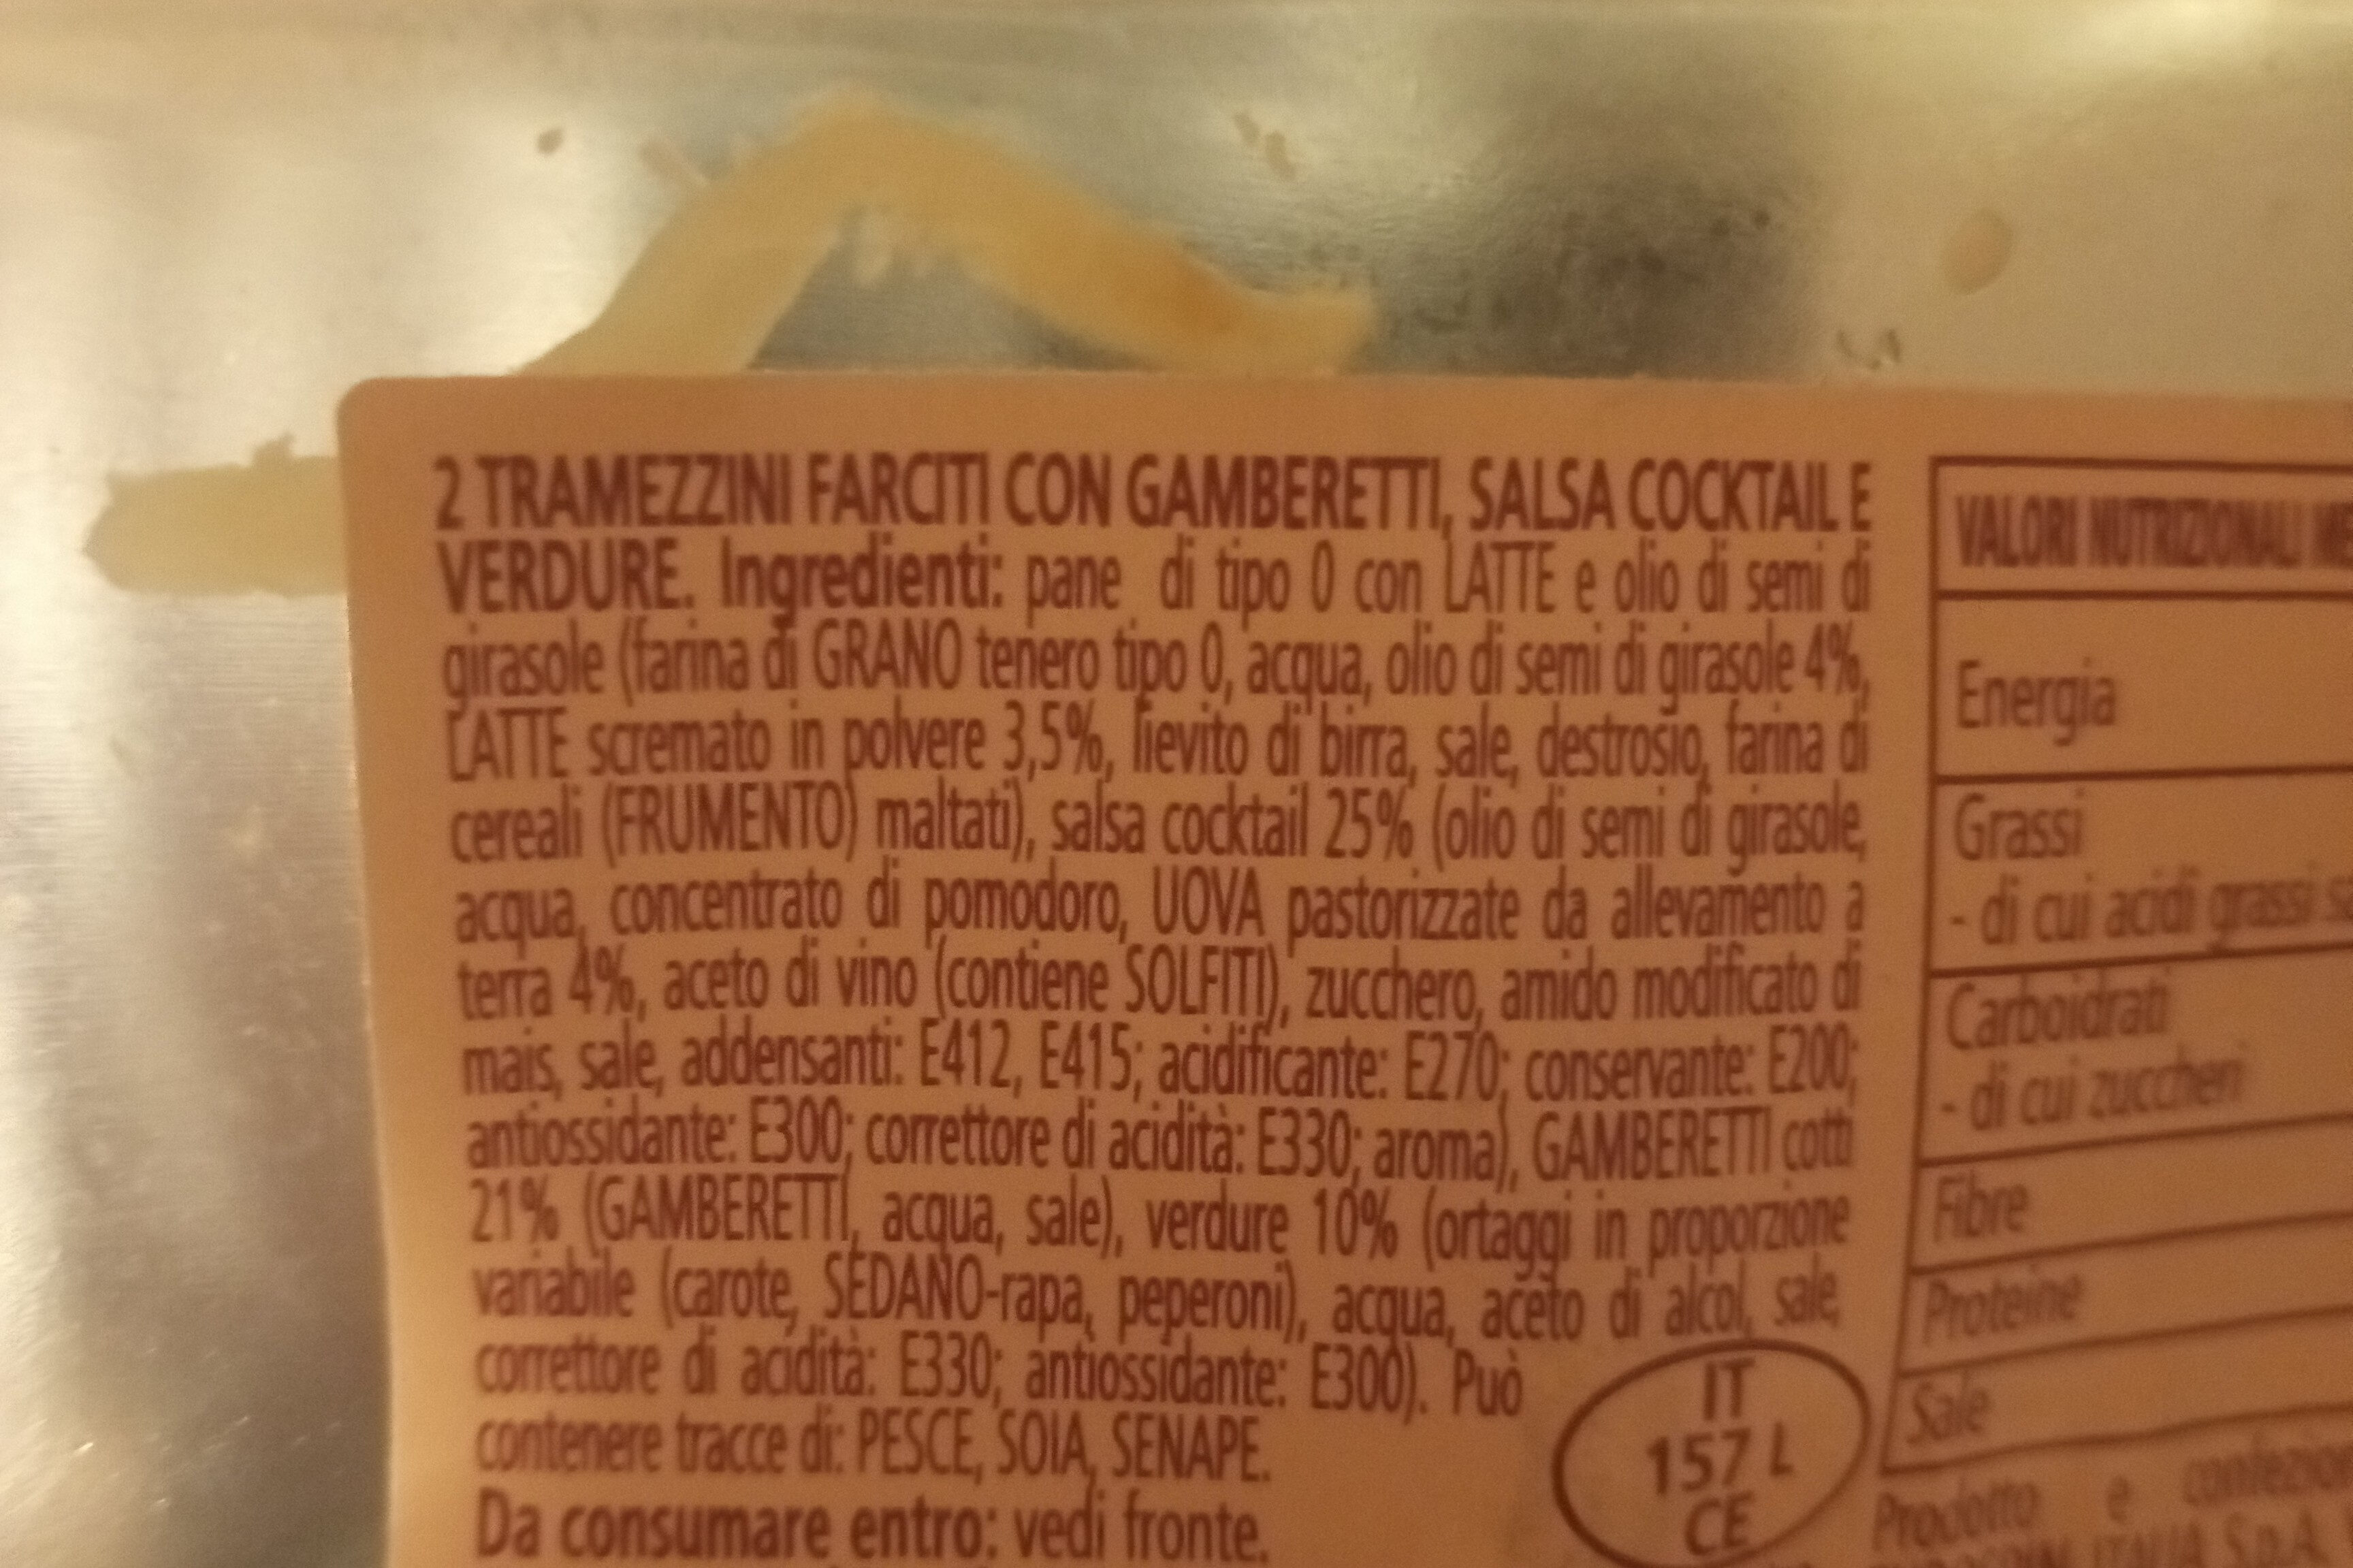 Gamberetti,salsa cocktail e verdure - Ingredienti